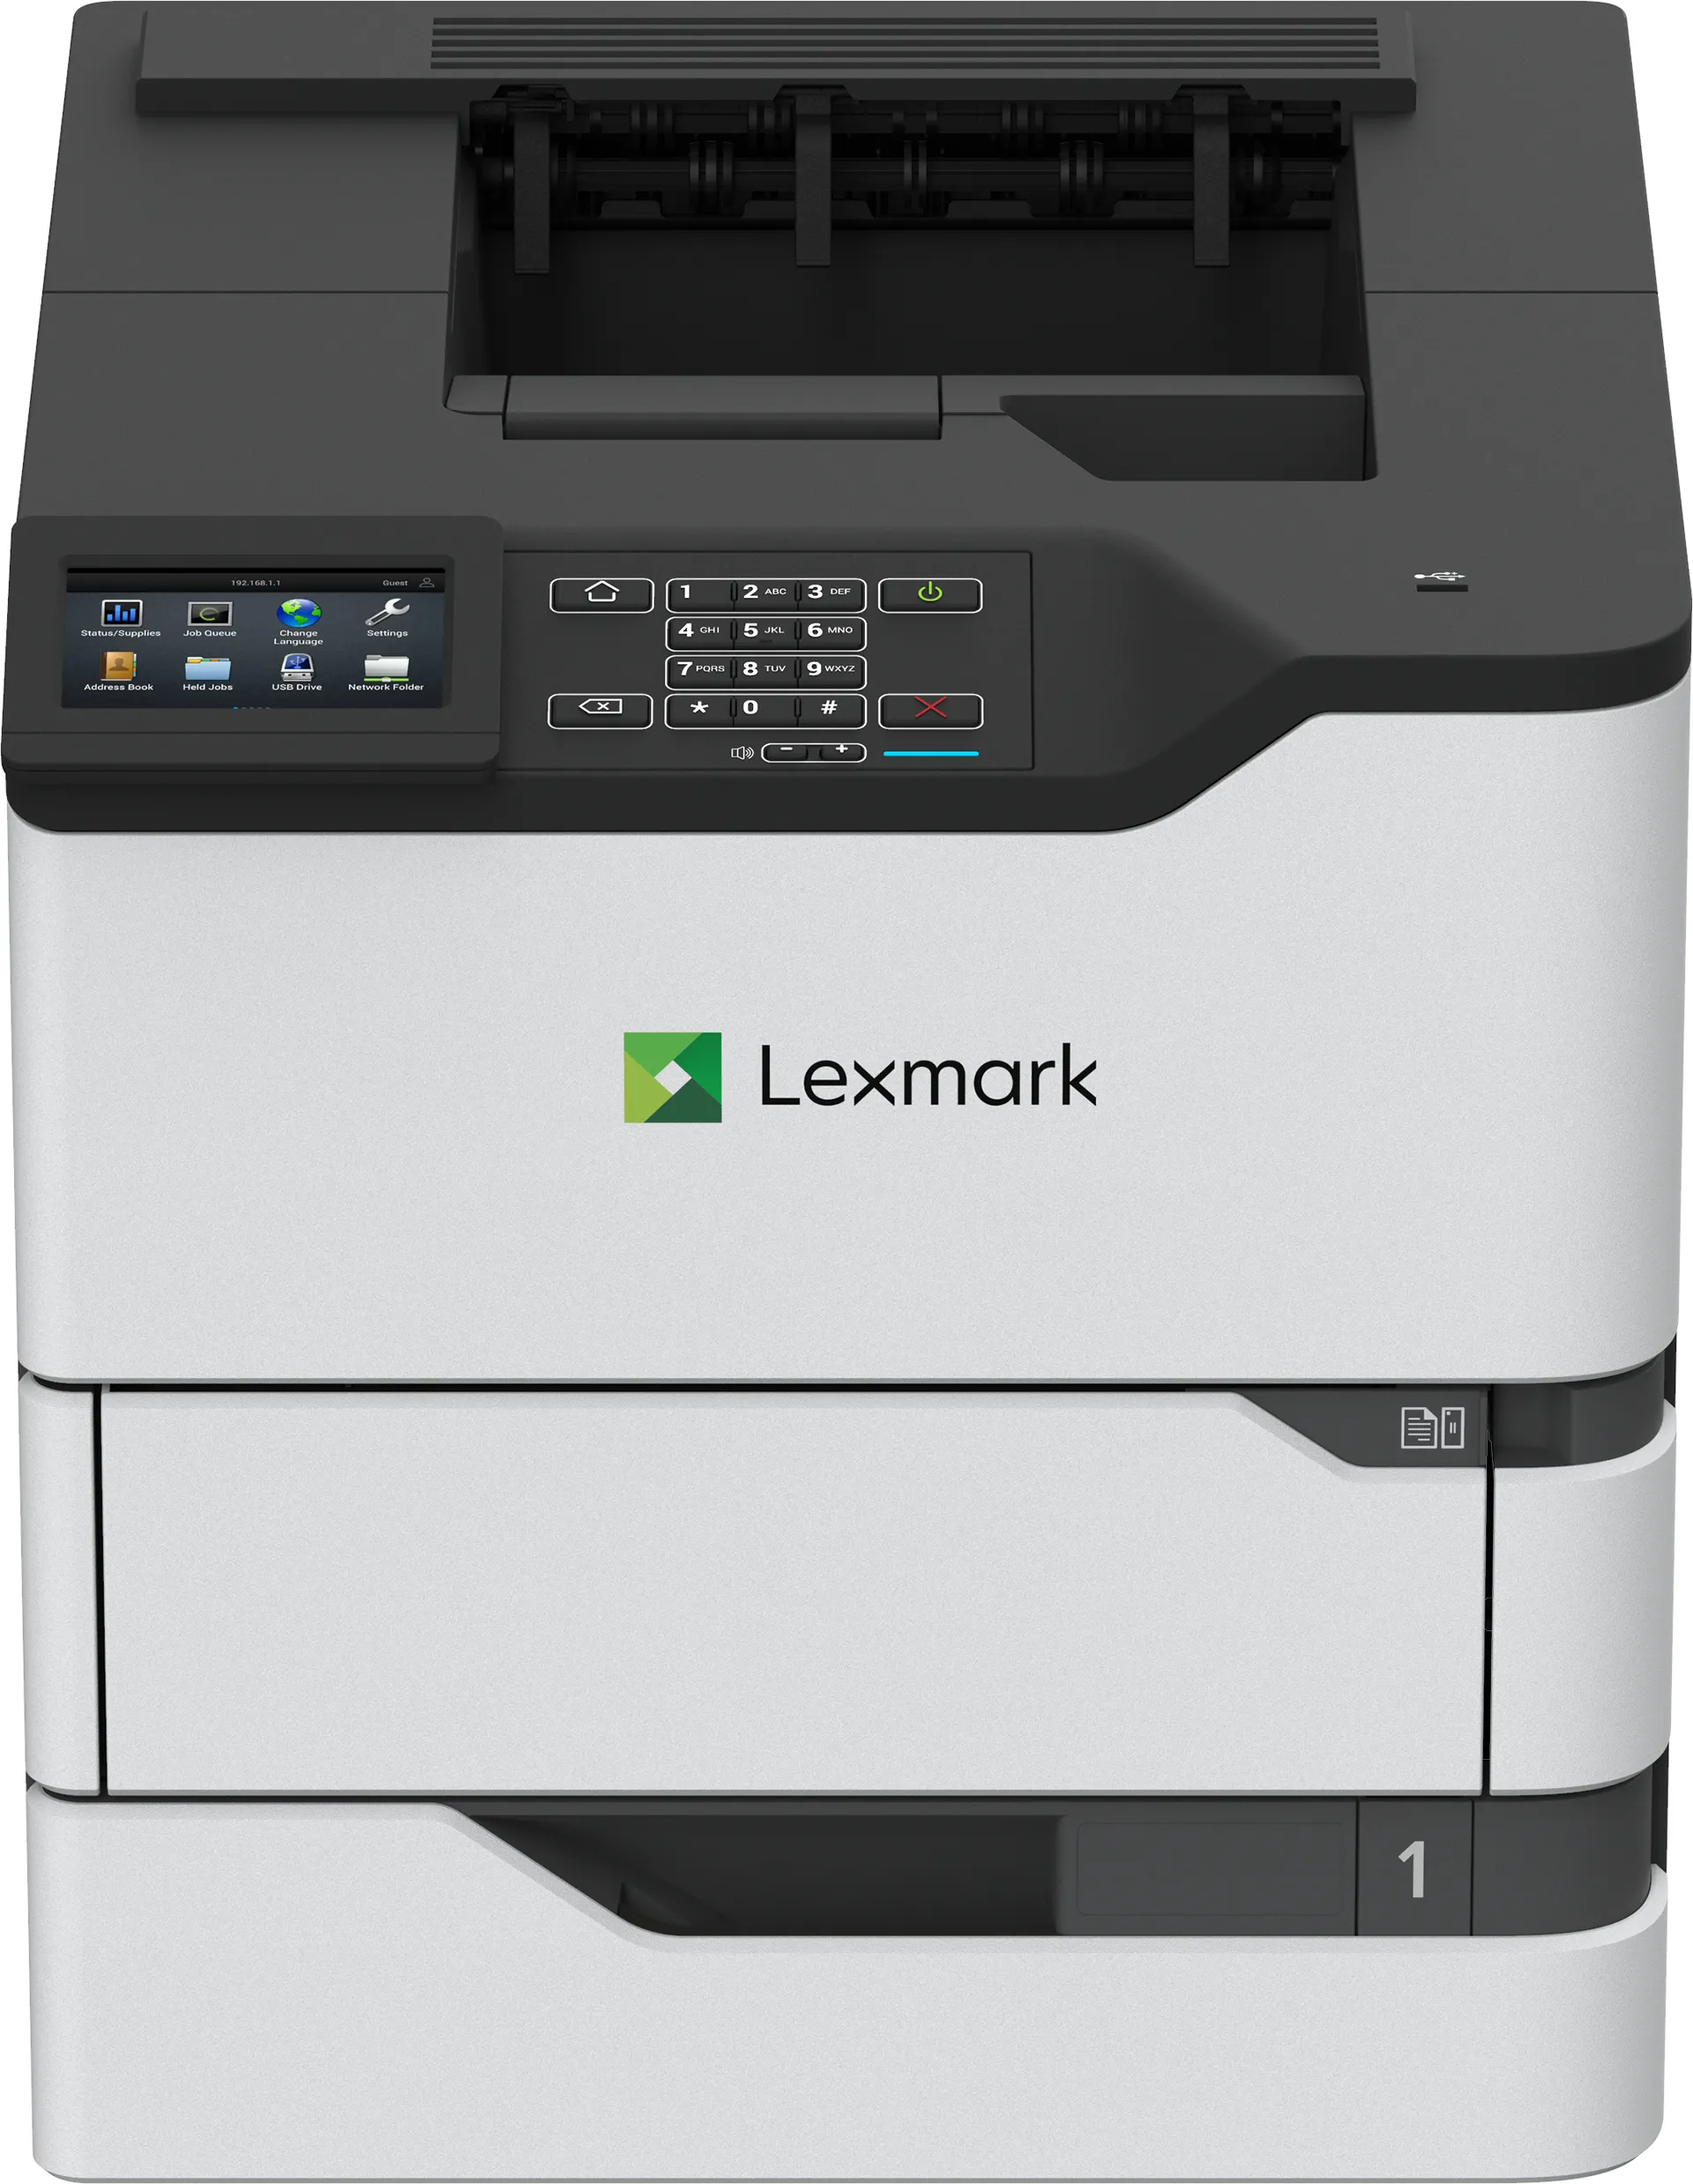 Vente Lexmark M5270 Lexmark au meilleur prix - visuel 2